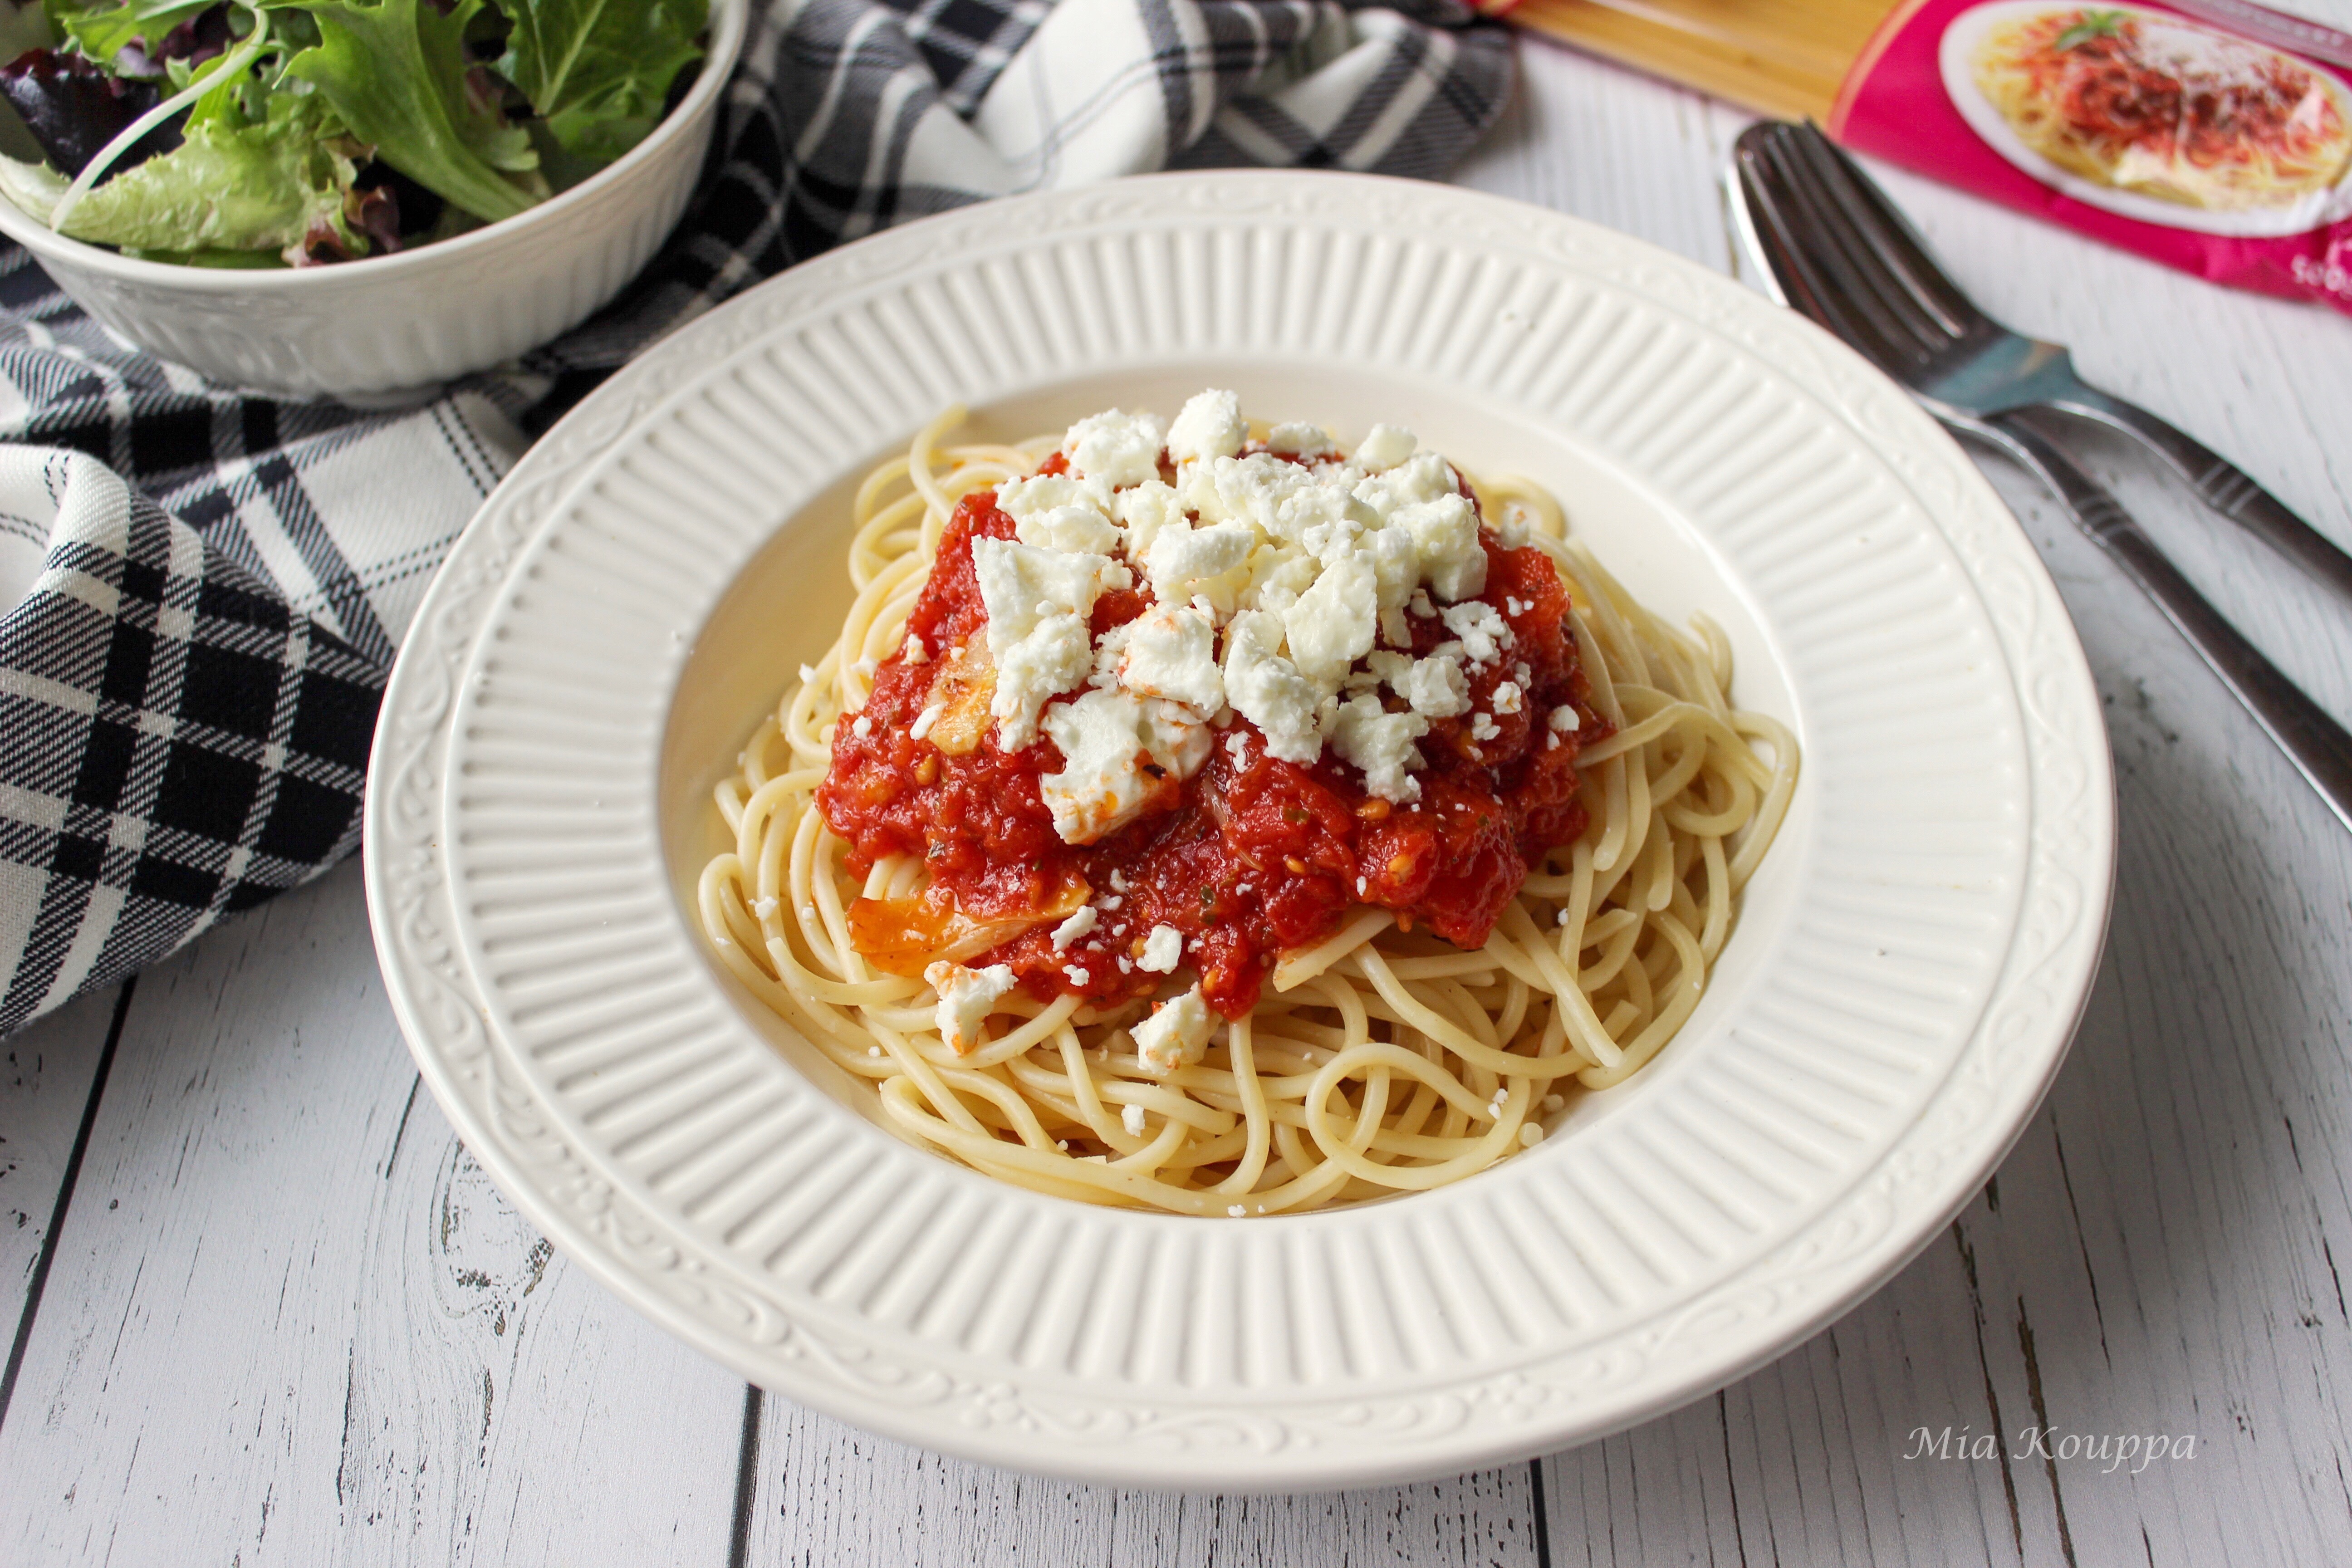 Pasta with tomato sauce and feta